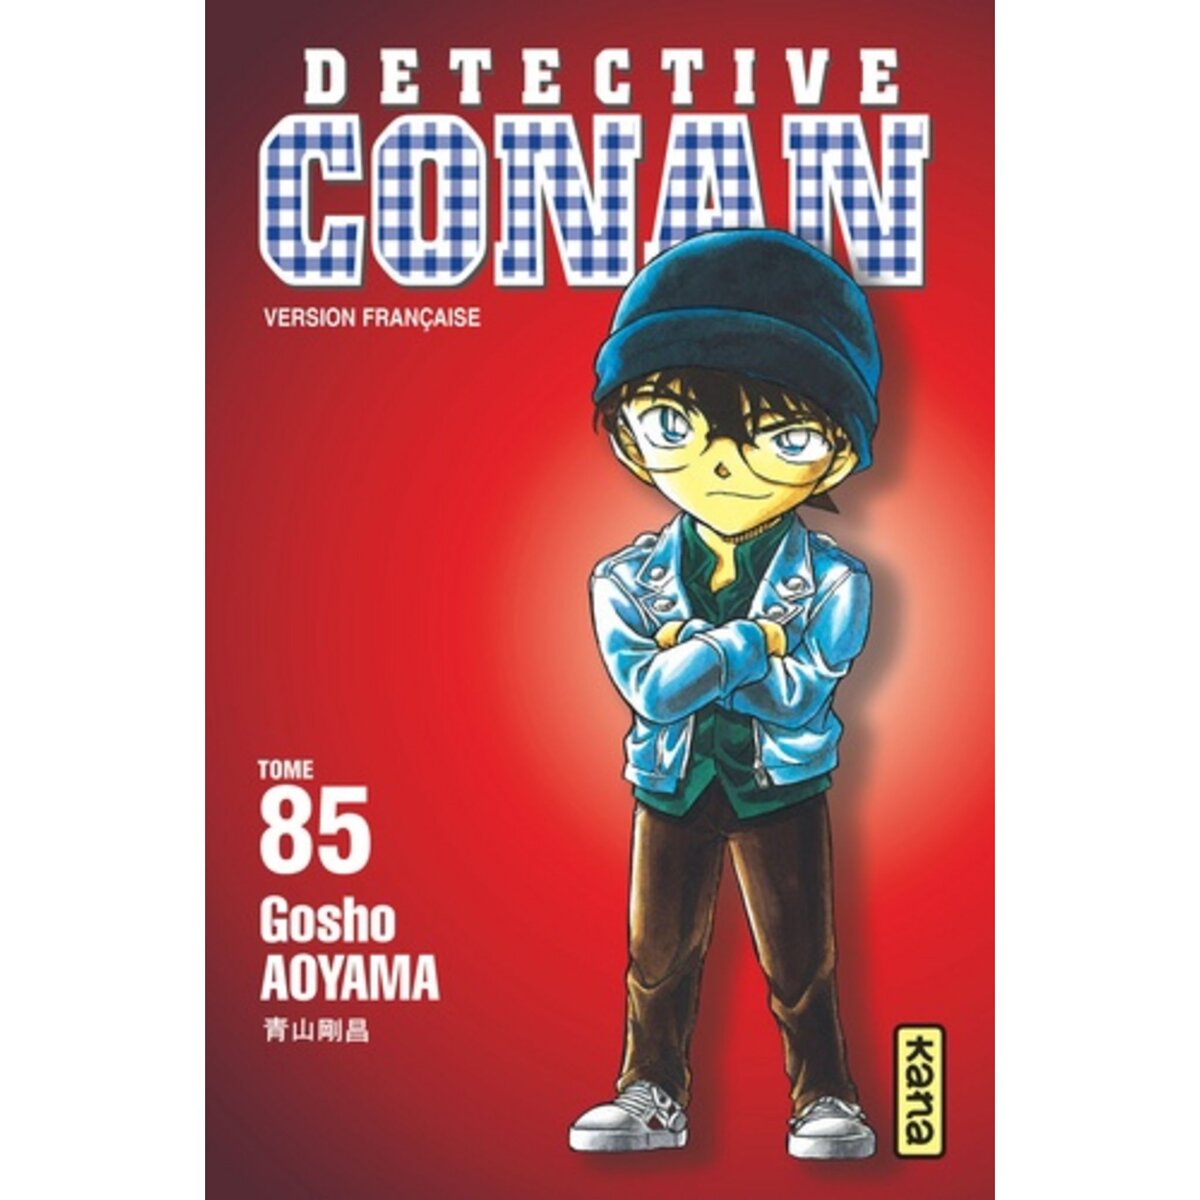  DETECTIVE CONAN TOME 85, Aoyama Gôshô